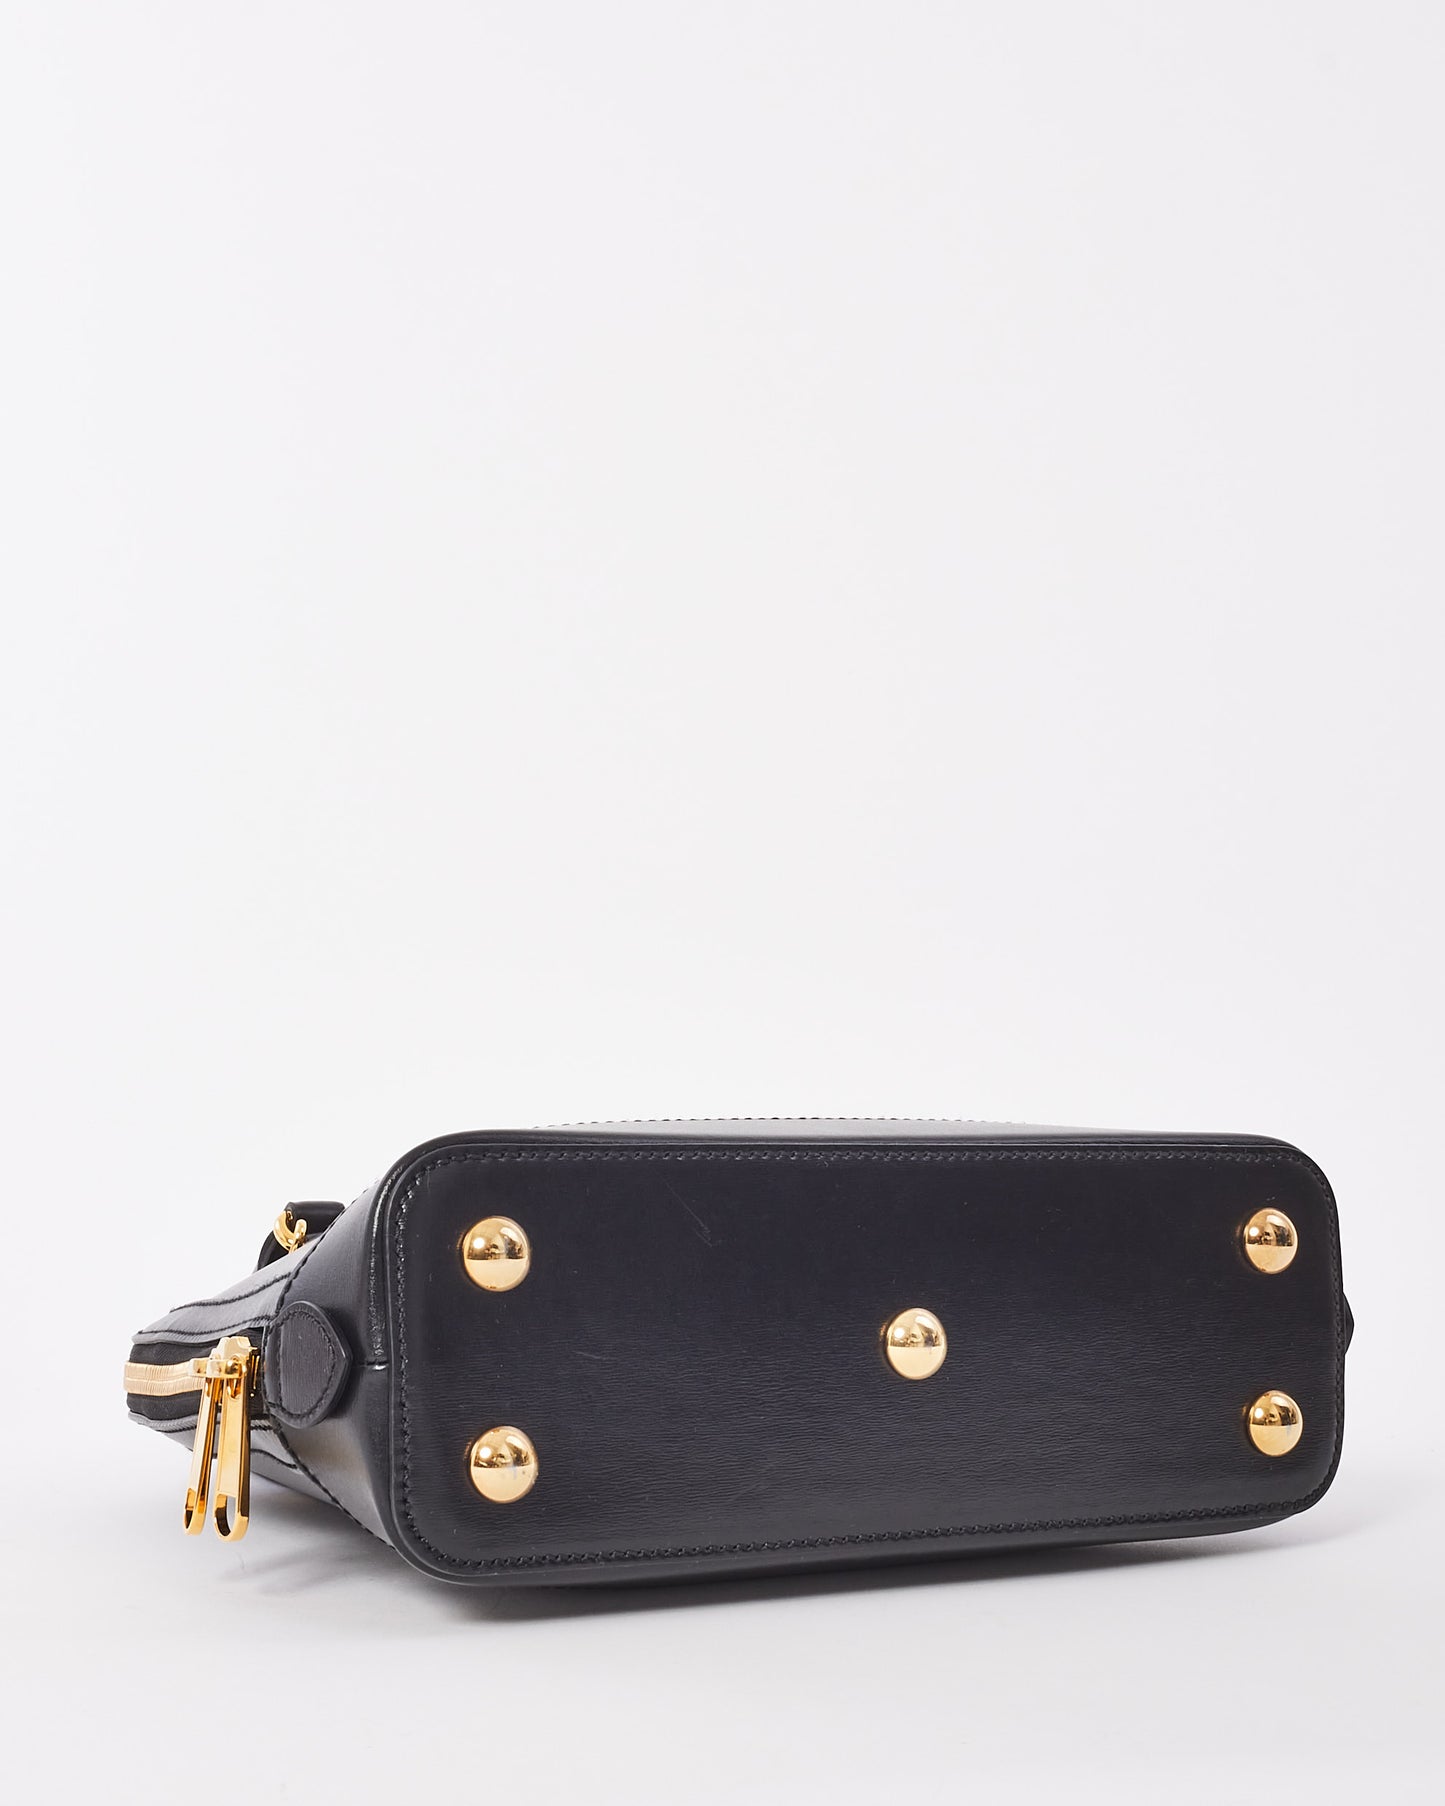 Gucci Black Smooth Leather 1945 Horsebit Top Handle Bag